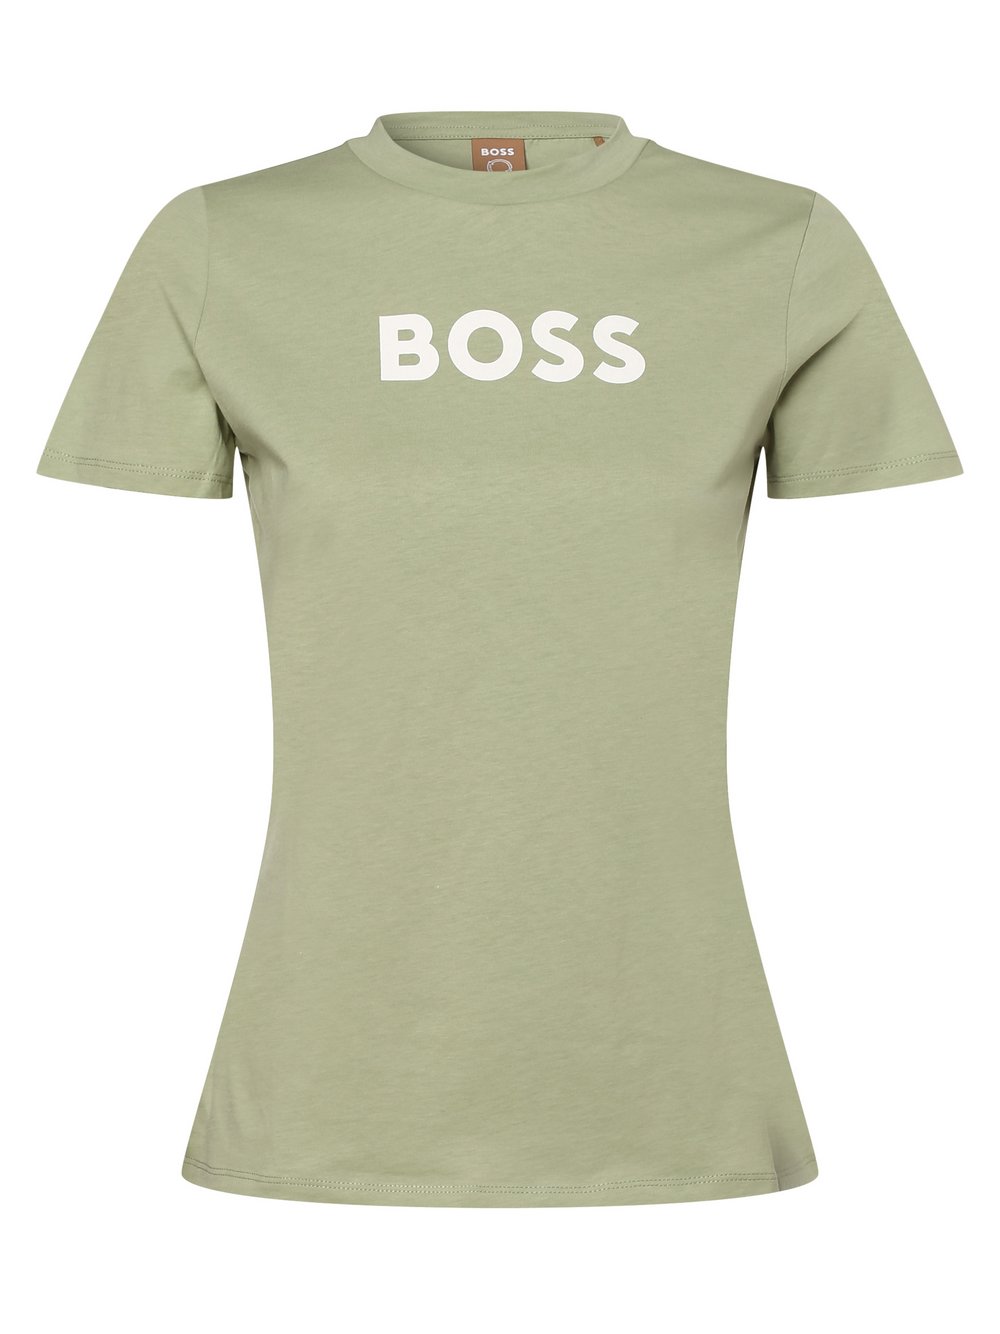 BOSS - T-shirt damski – C_Elogo_5, zielony